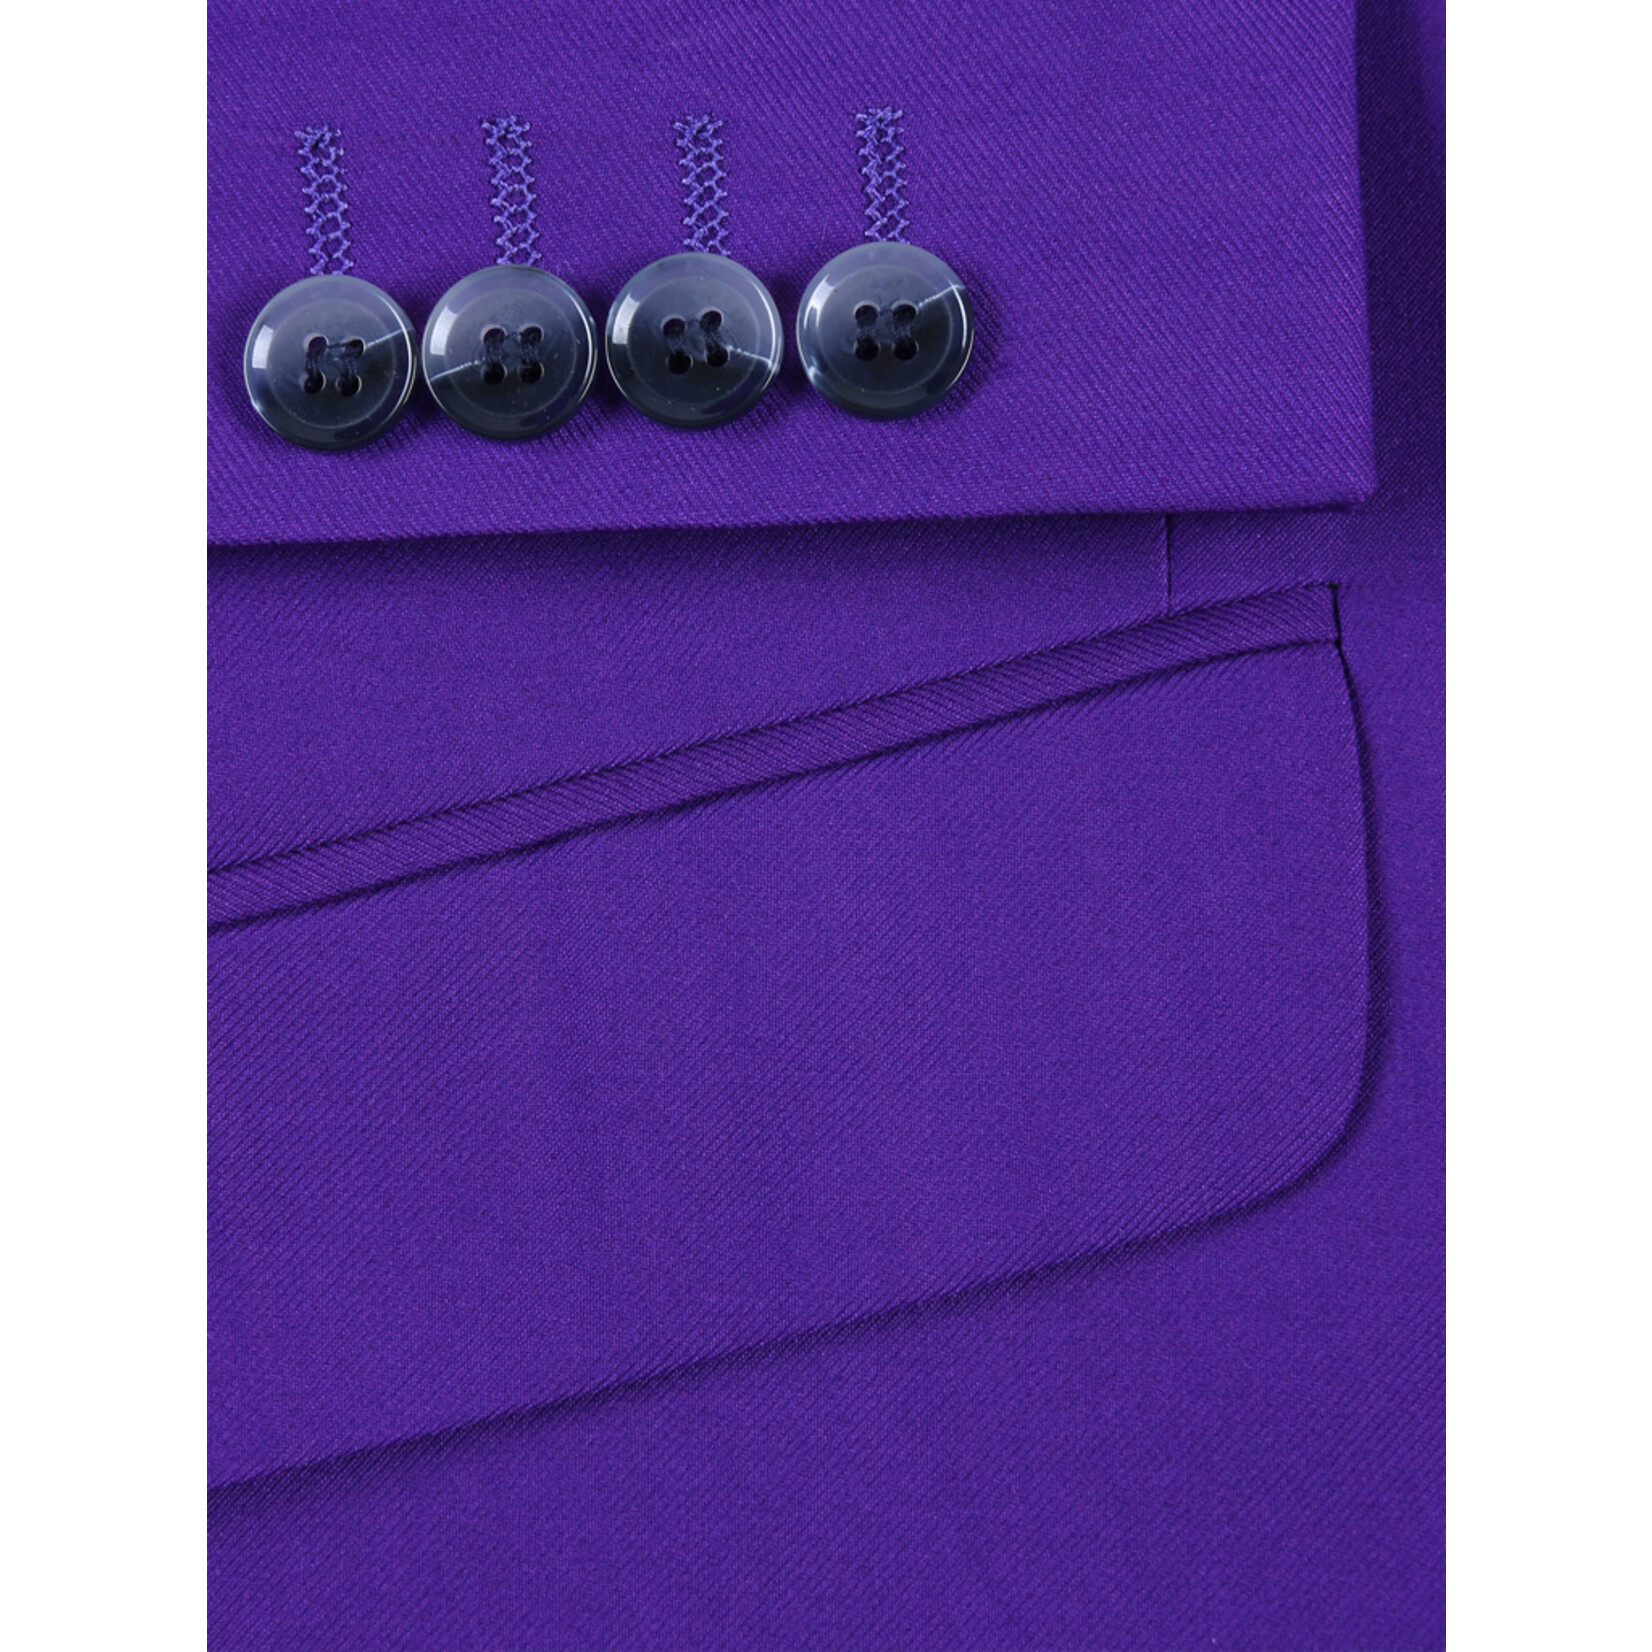 Renoir Renoir Slim Fit Suit 201-68 Purple WEB ONLY